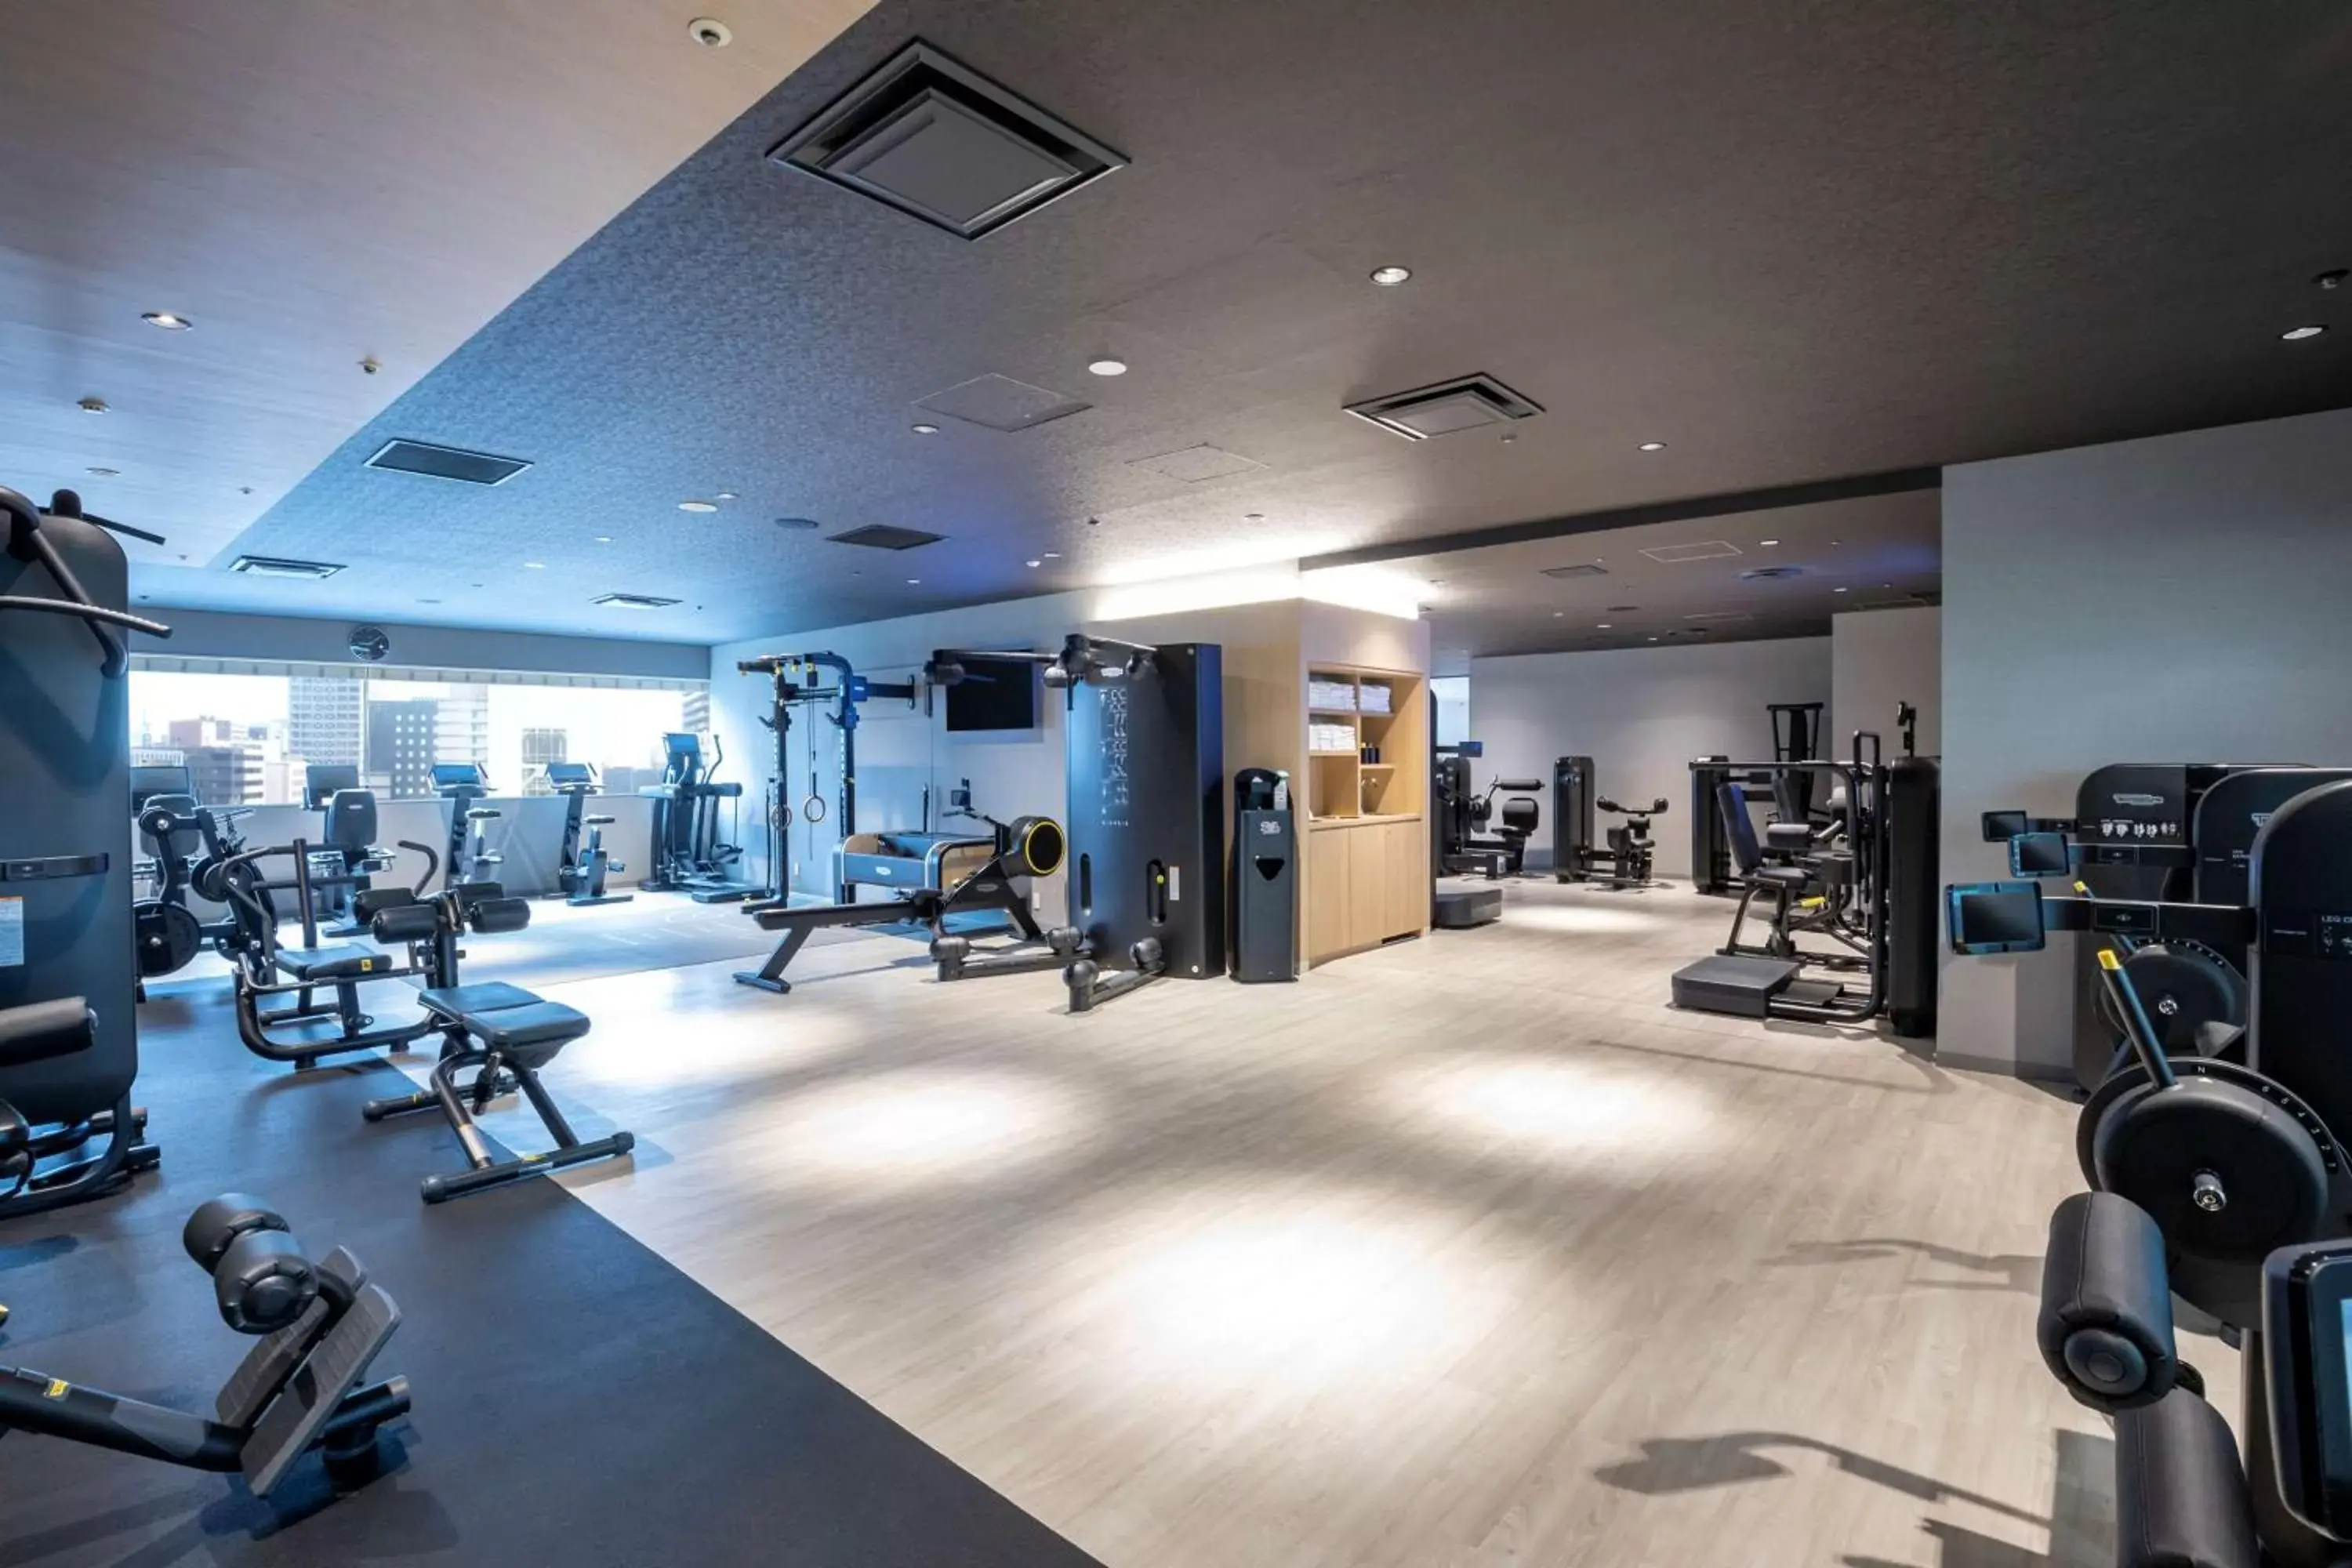 Fitness centre/facilities, Fitness Center/Facilities in Hilton Nagoya Hotel